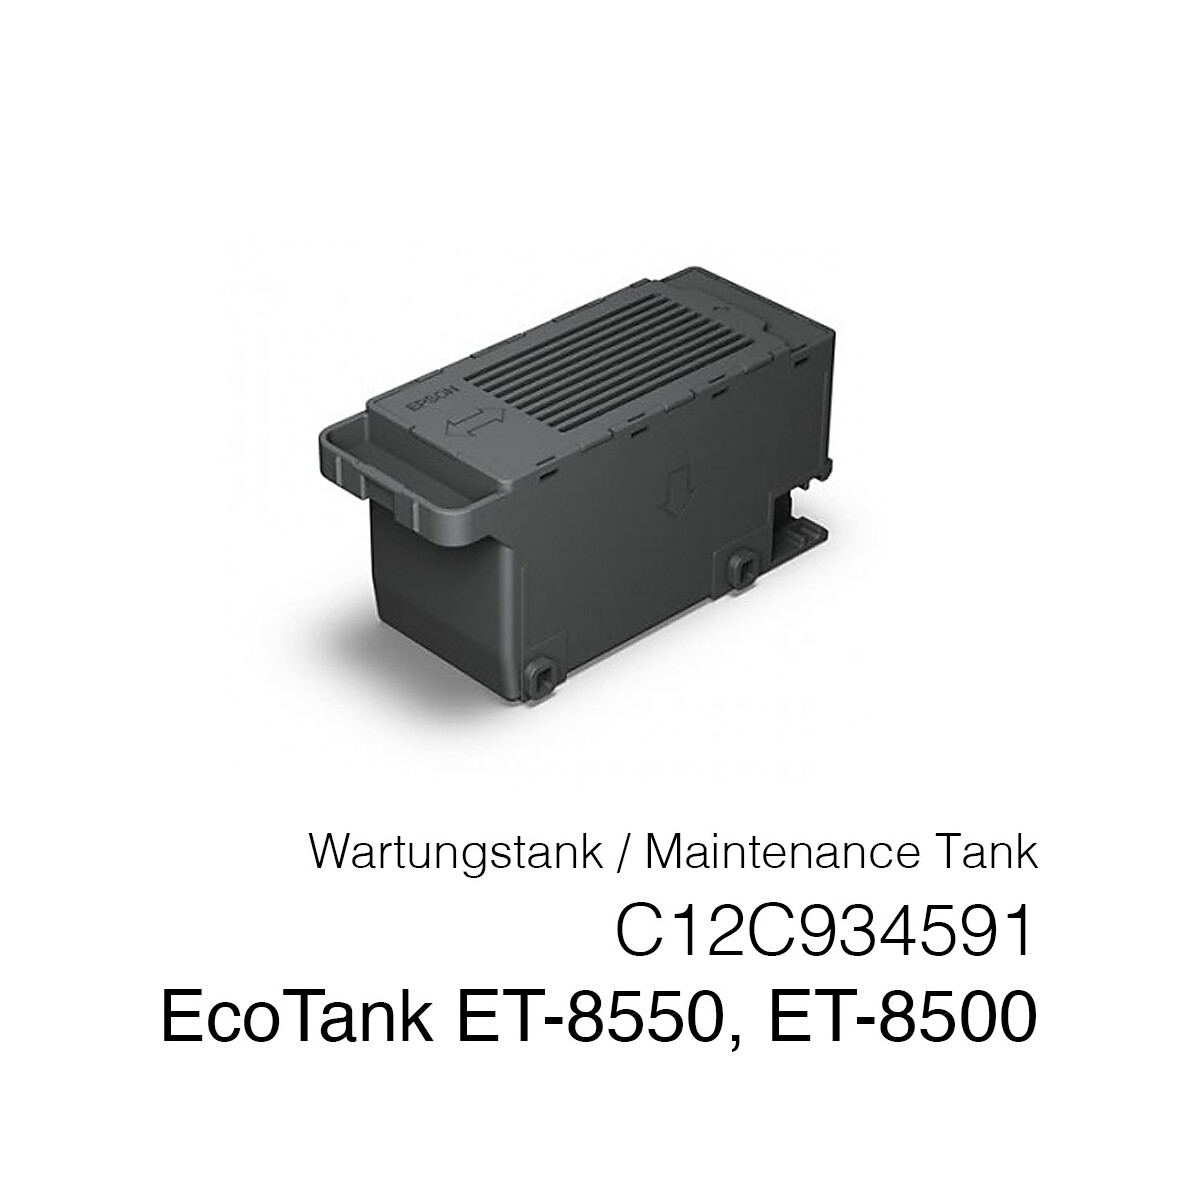 Maintenance Tank C12C934591 for EcoTank Series